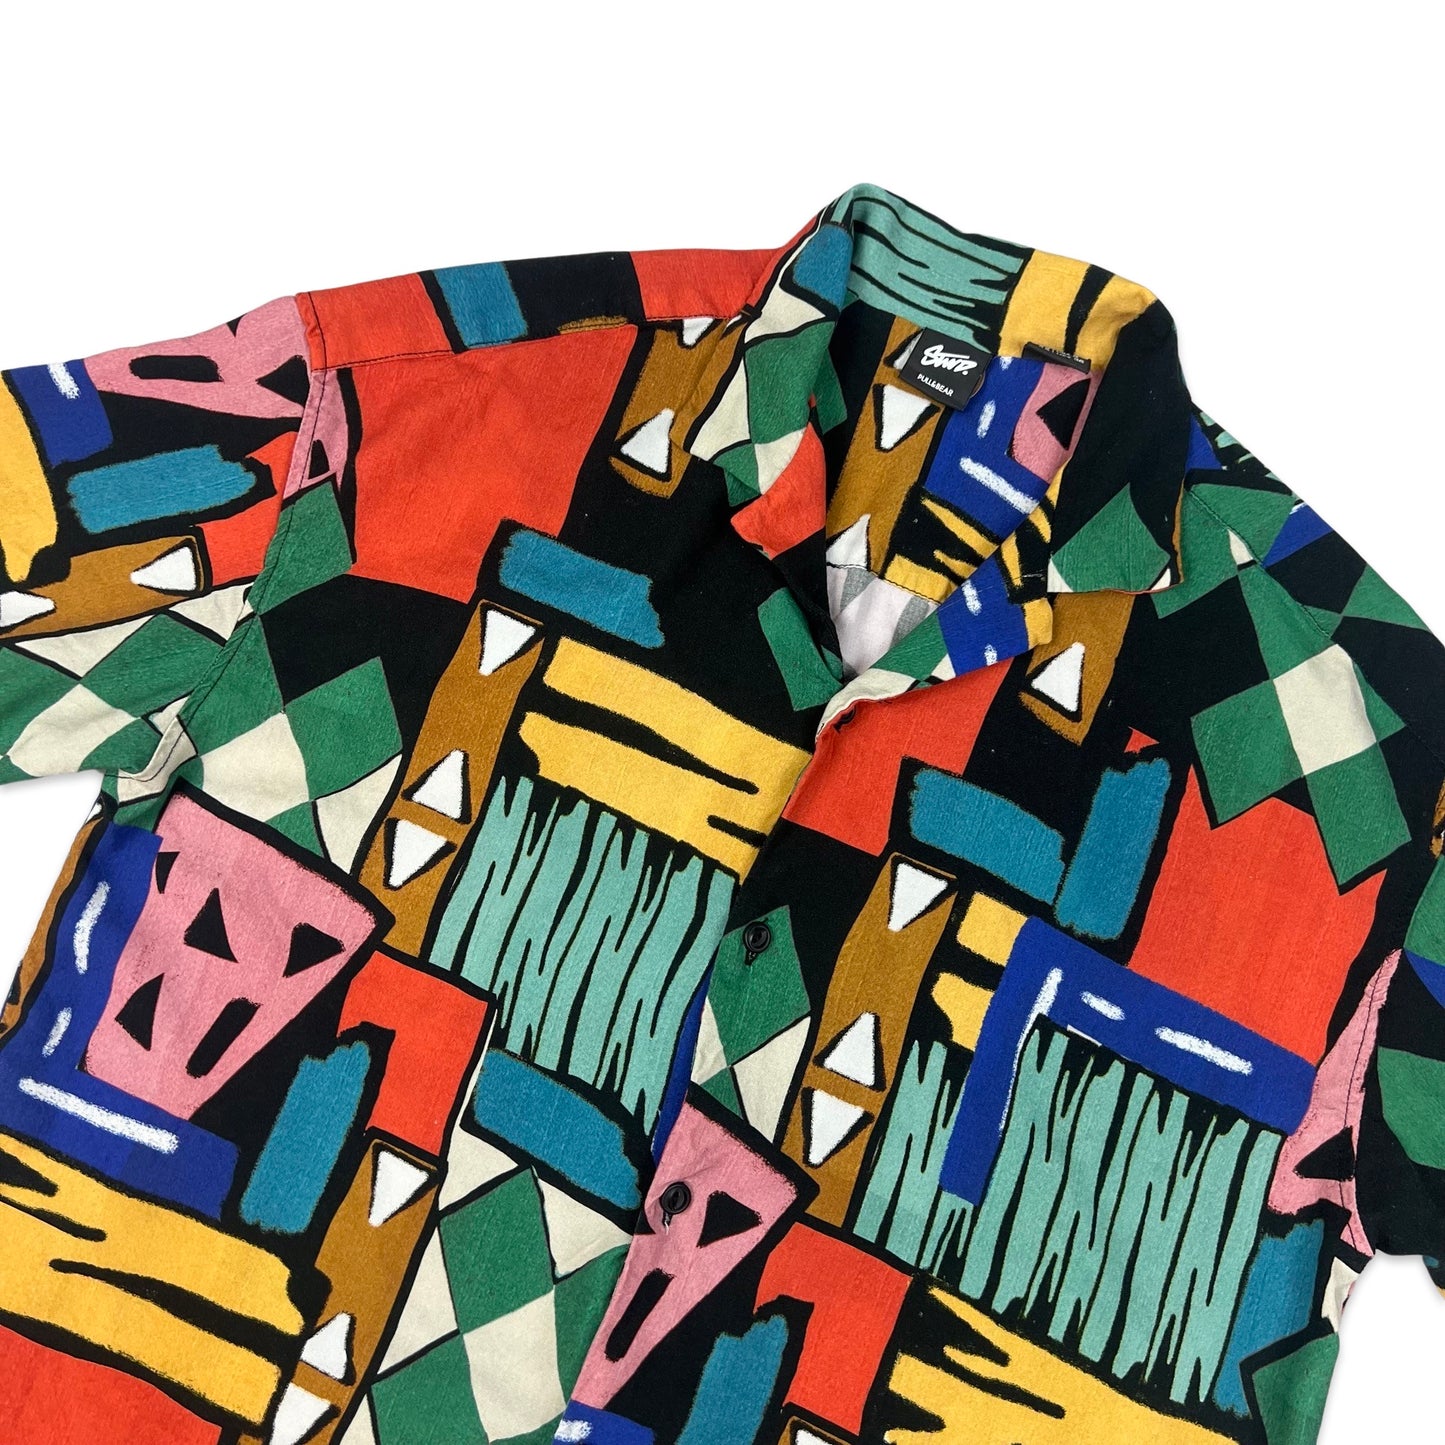 Pull & Bear Abstract Print Multicolour Short Sleeve Shirt S M